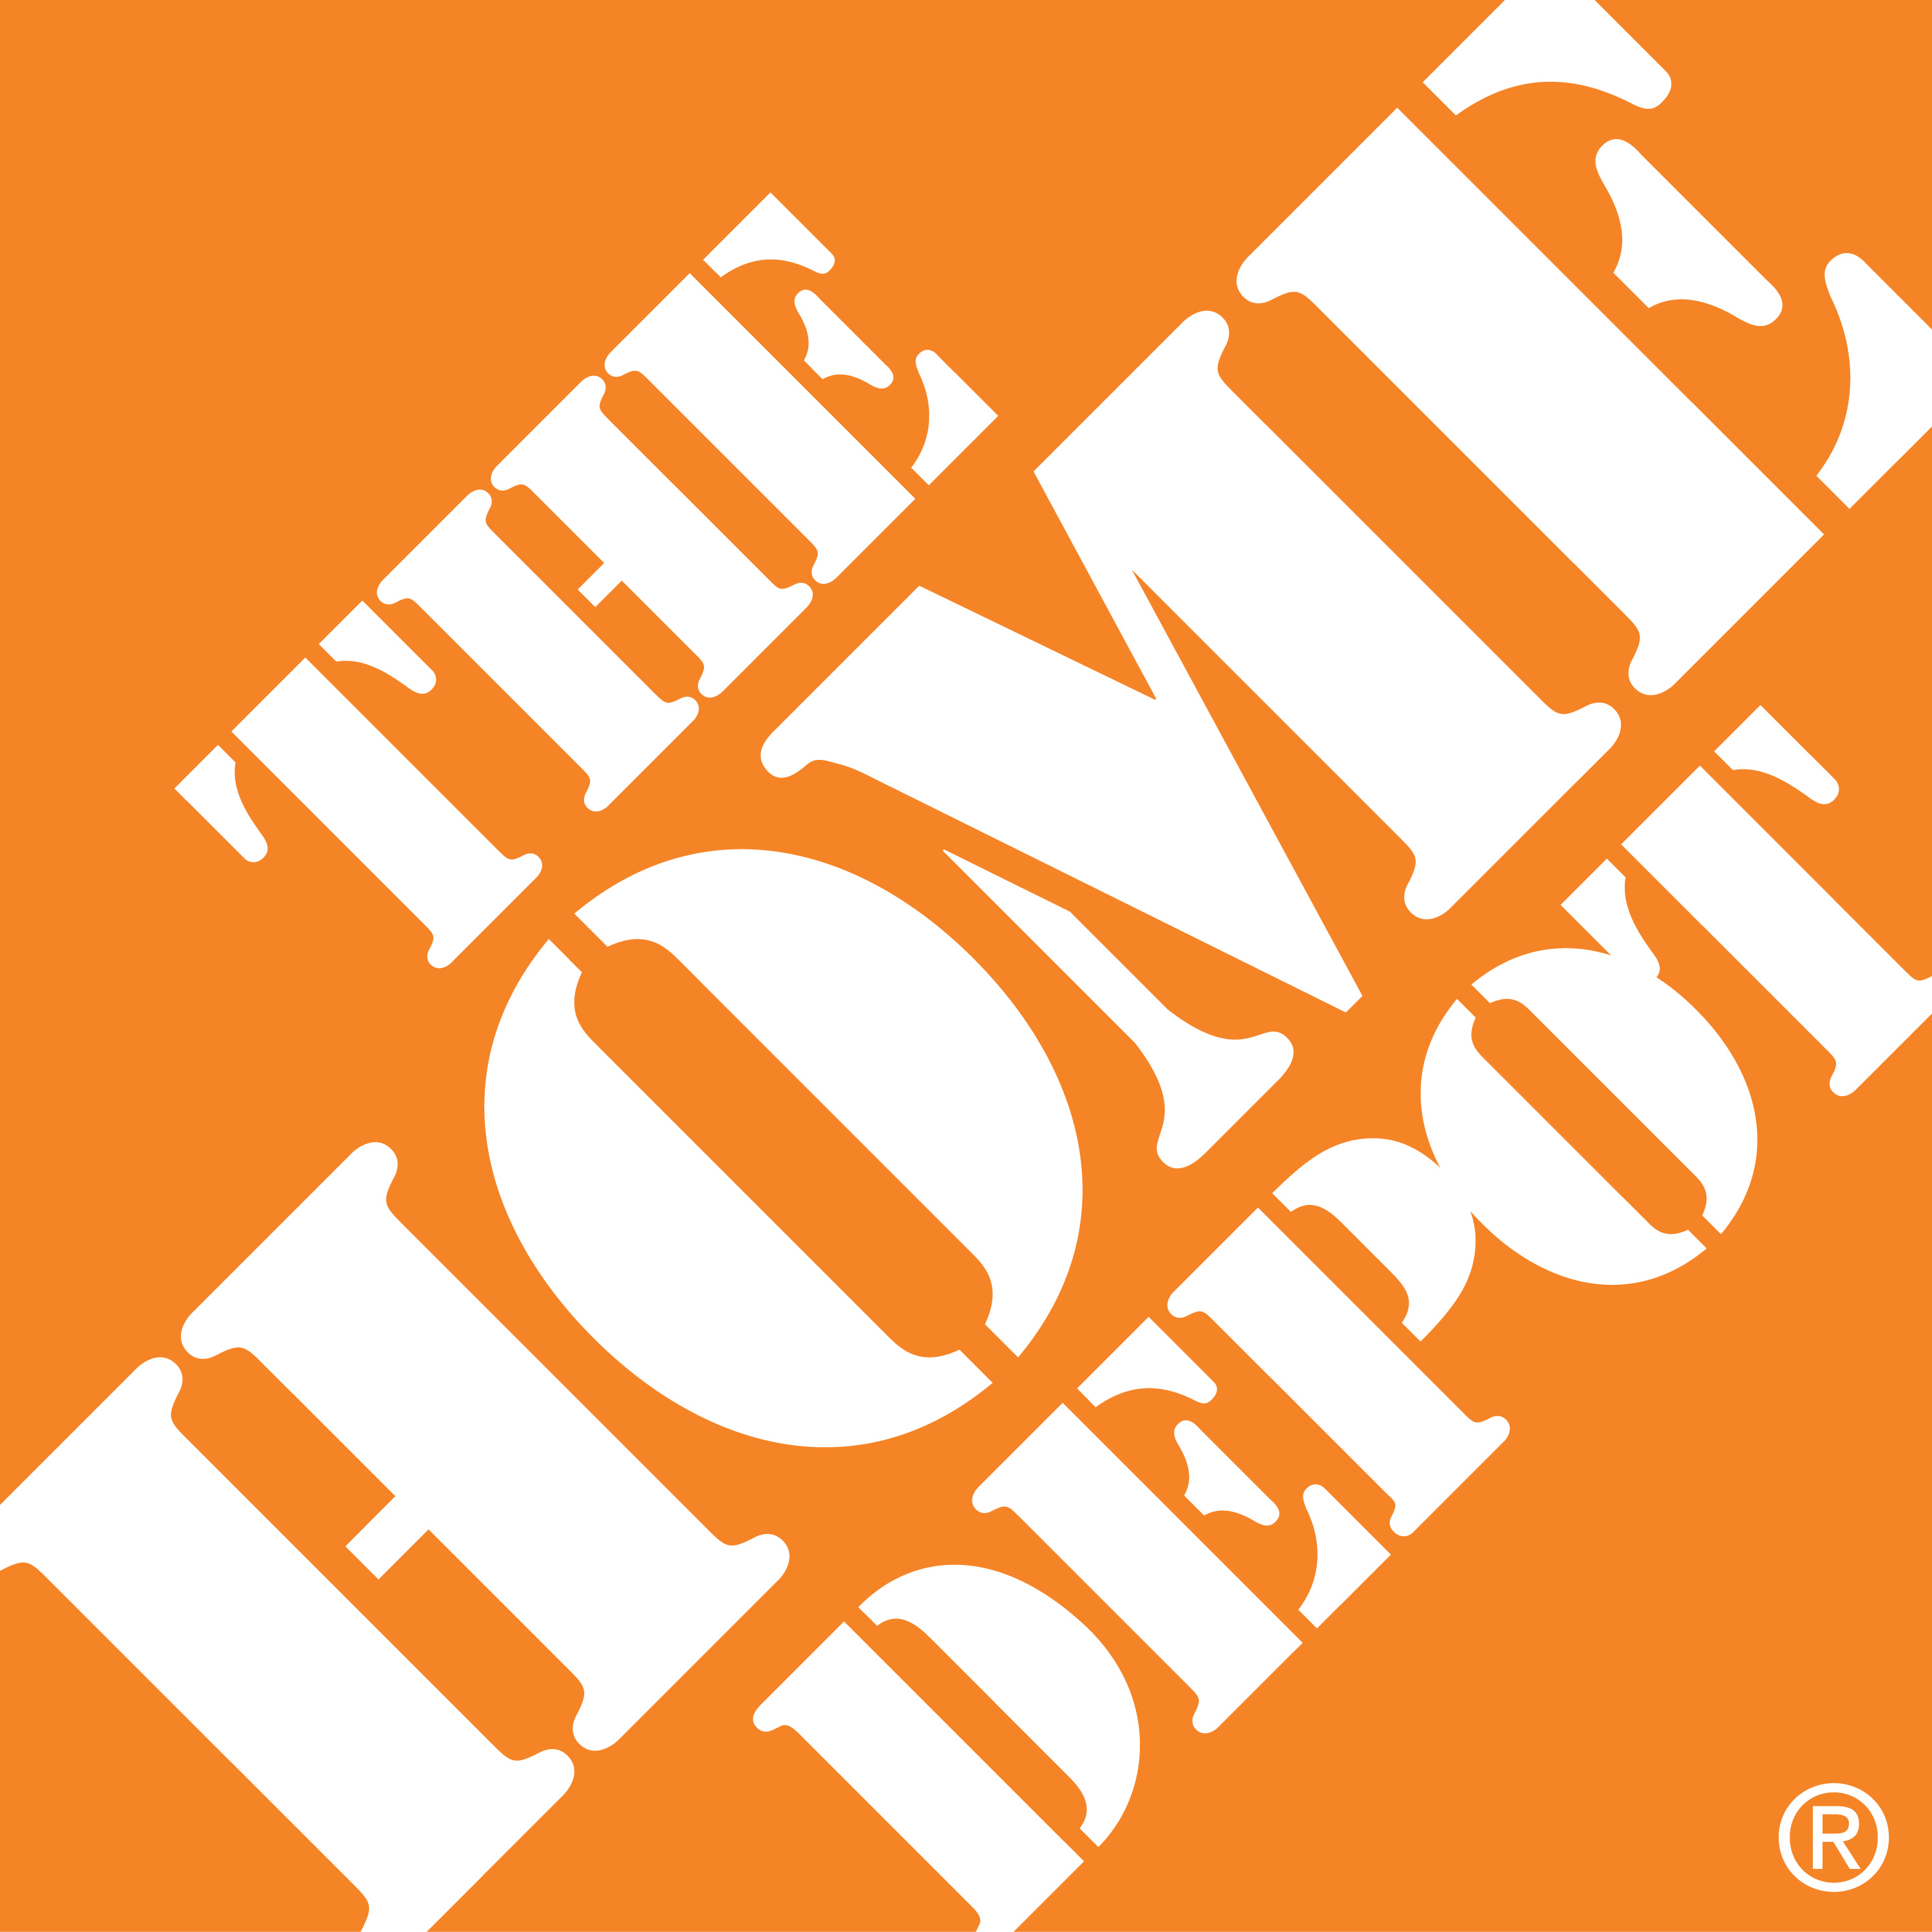 Haz clic al logo de Home Depot para ver oportunidades de empleo